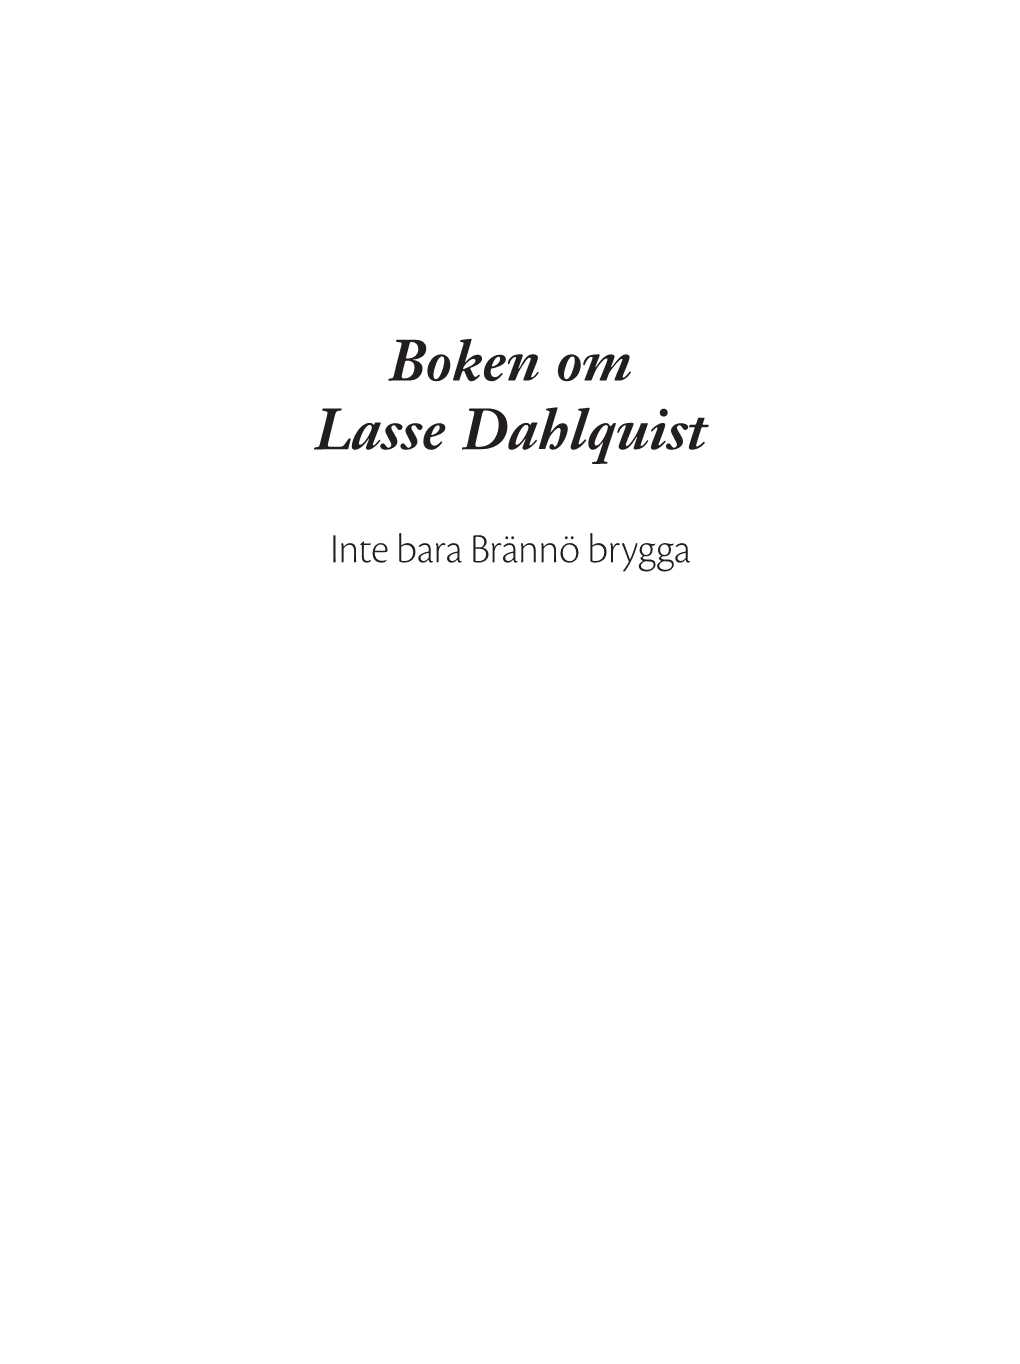 Boken Om Lasse Dahlquist